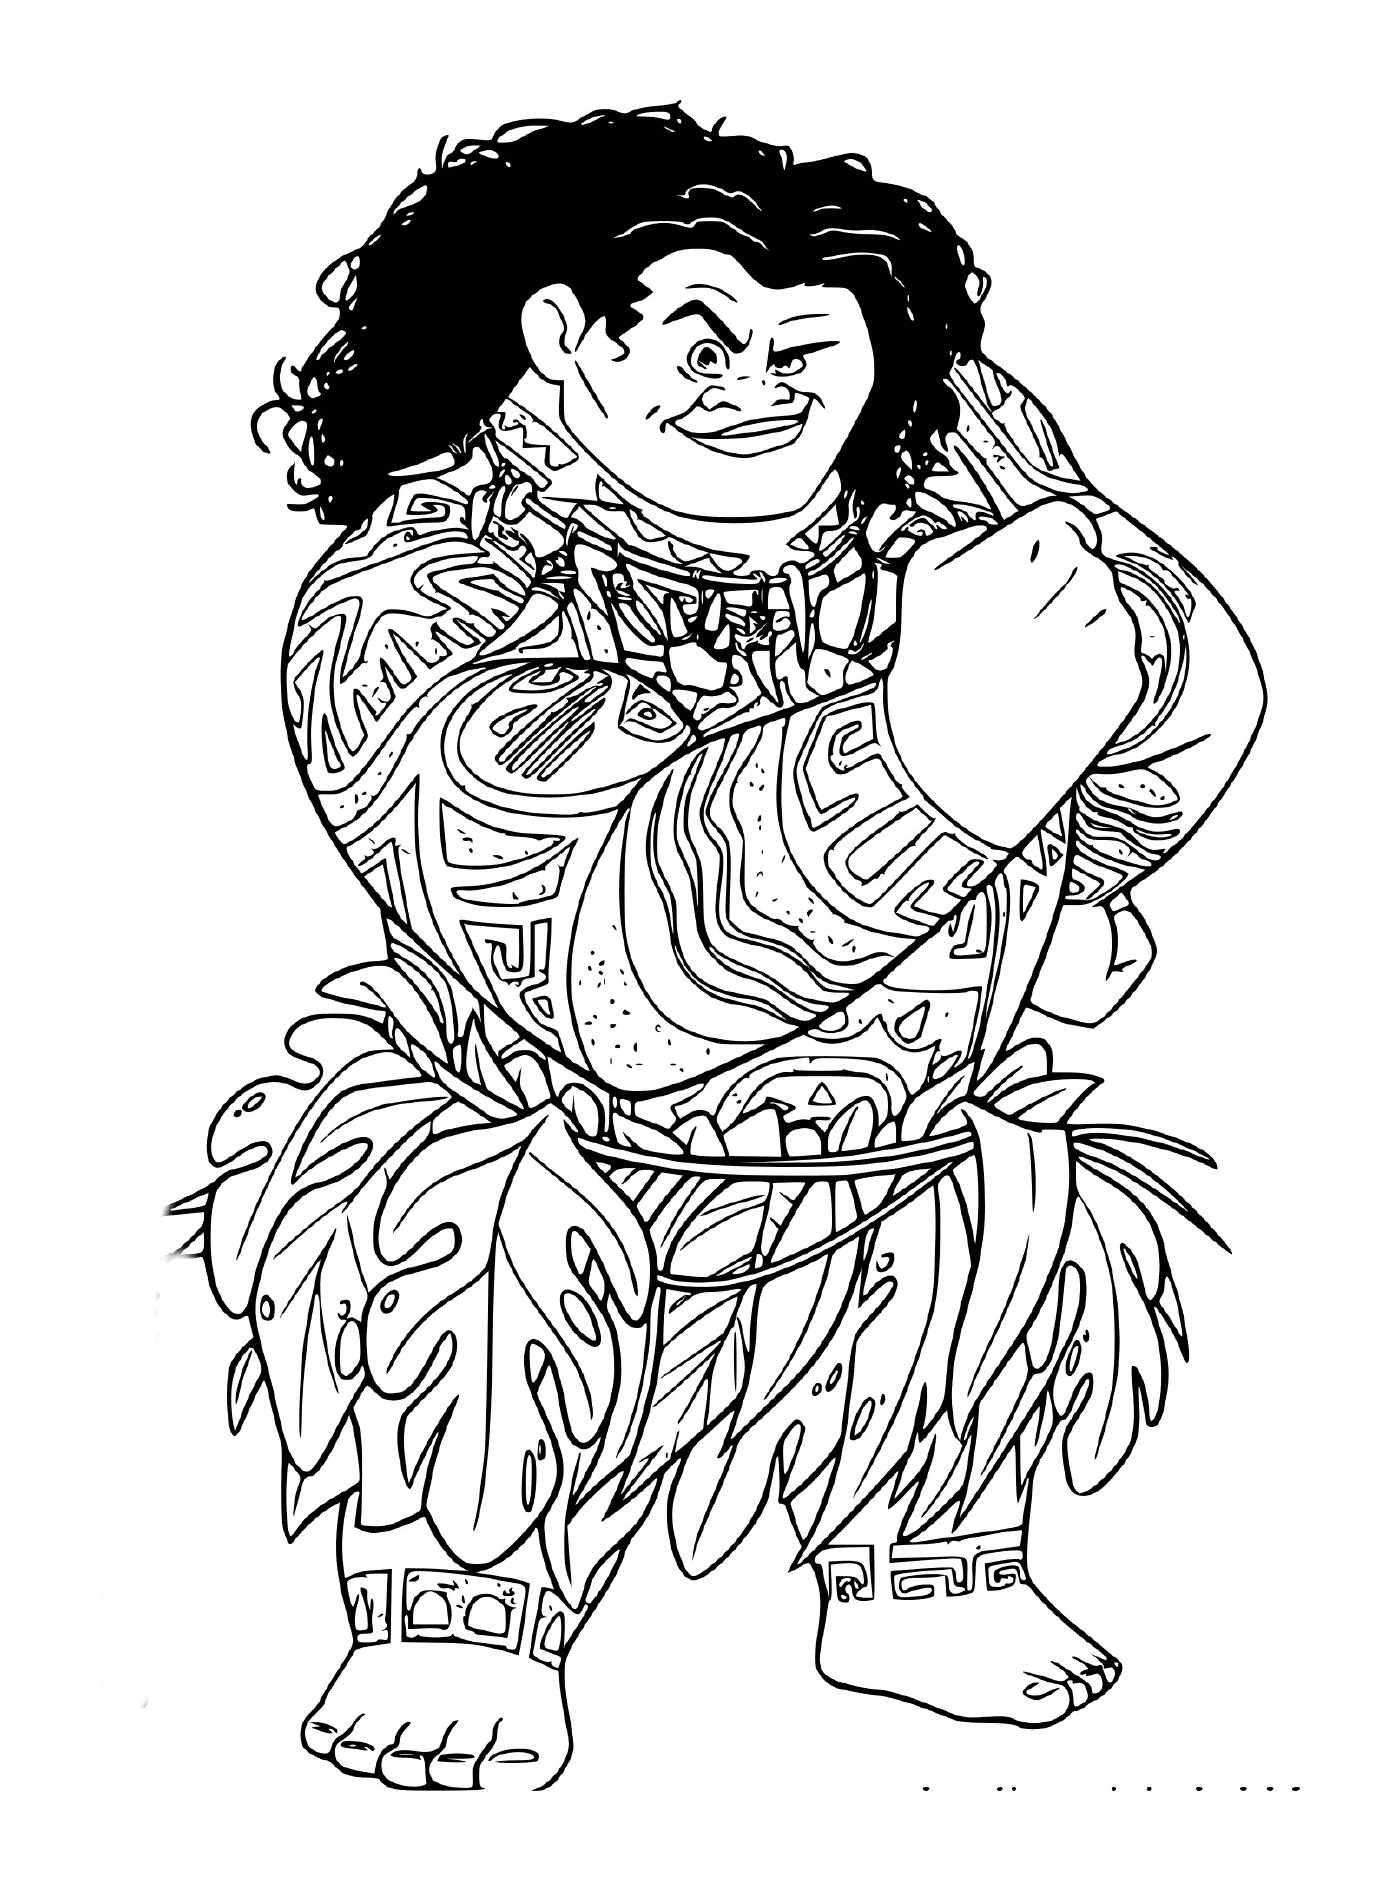  Maui, strong man of Vaiana Disney 